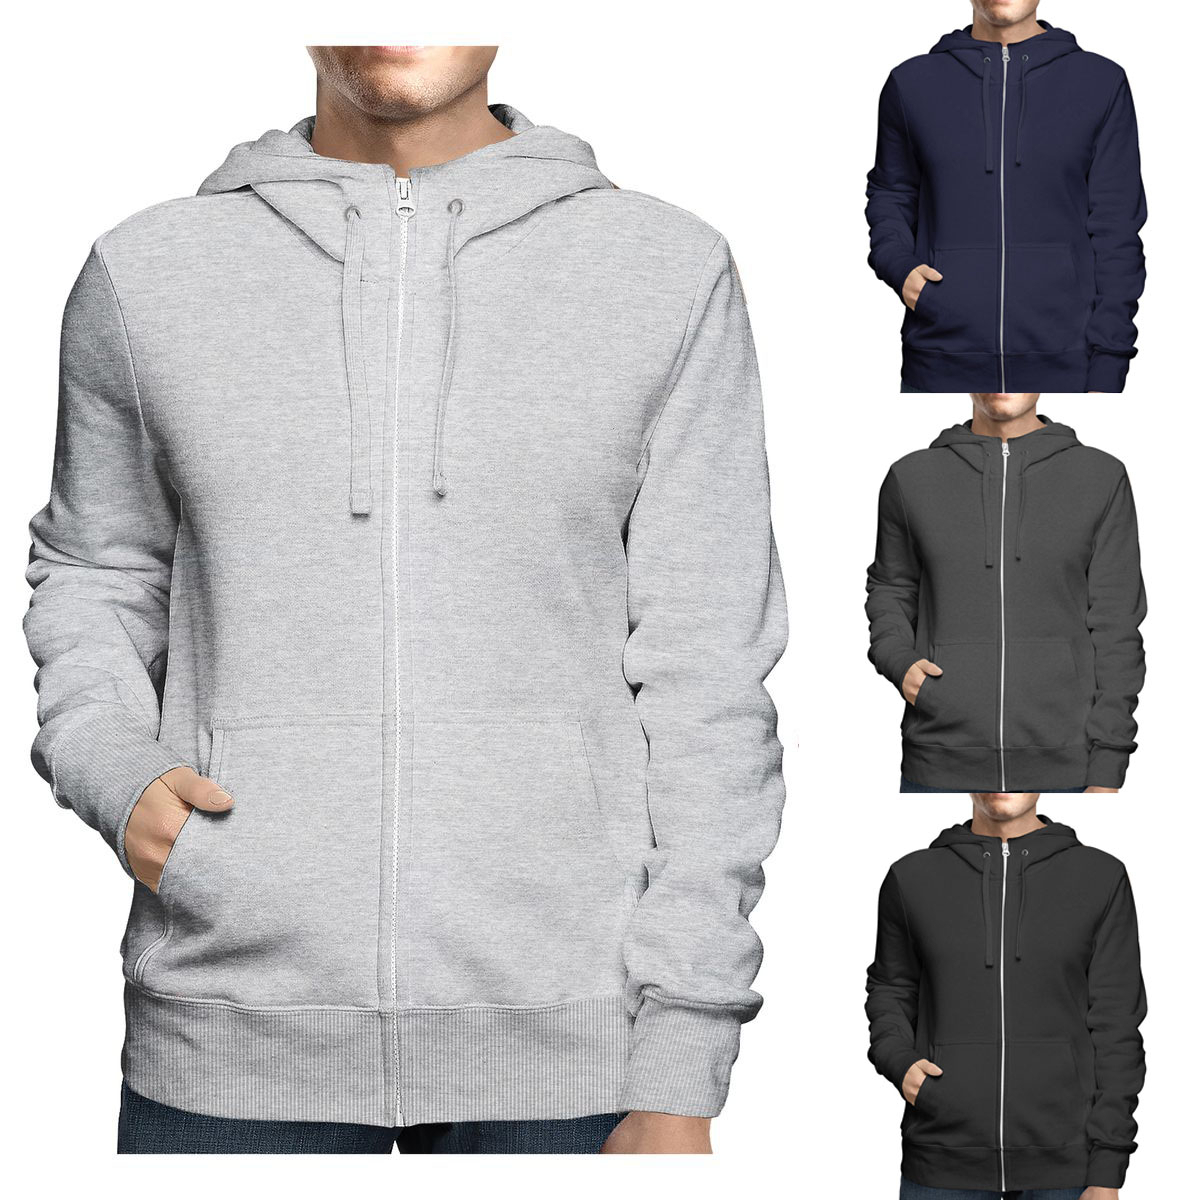 Multi-Pack: Men's Premium Soft Cozy Full Zip-Up Fleece Lined Hoodie Sweatshirt - 1-pack, Large